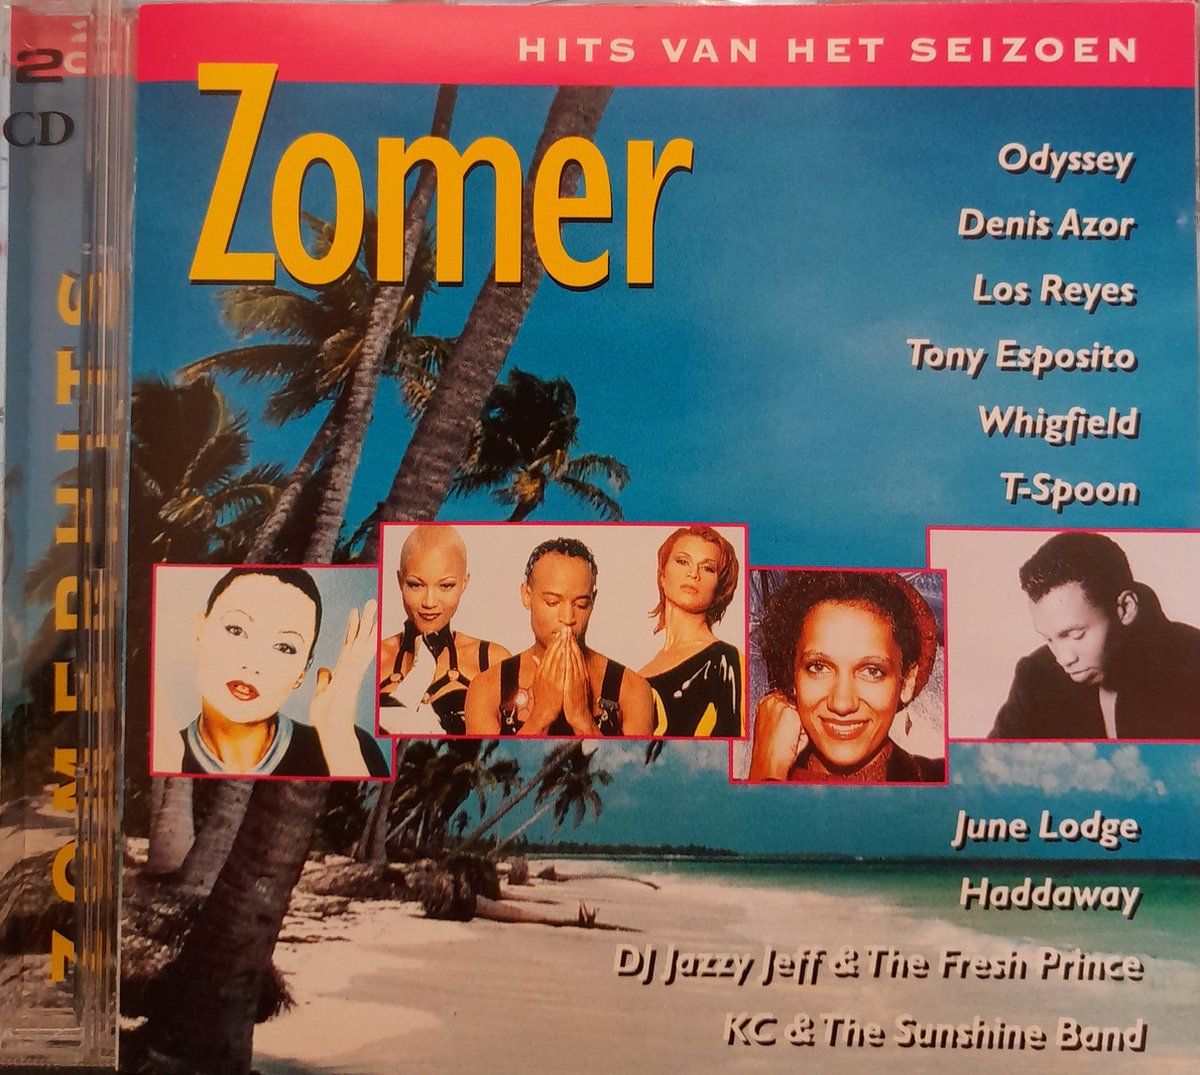 ZOMER - Hits Van Het Seizoen - Dubbel Cd - Londonbeat, Middle Of The Road, Haddaway, T Spoon, Rumba Tres - various artists